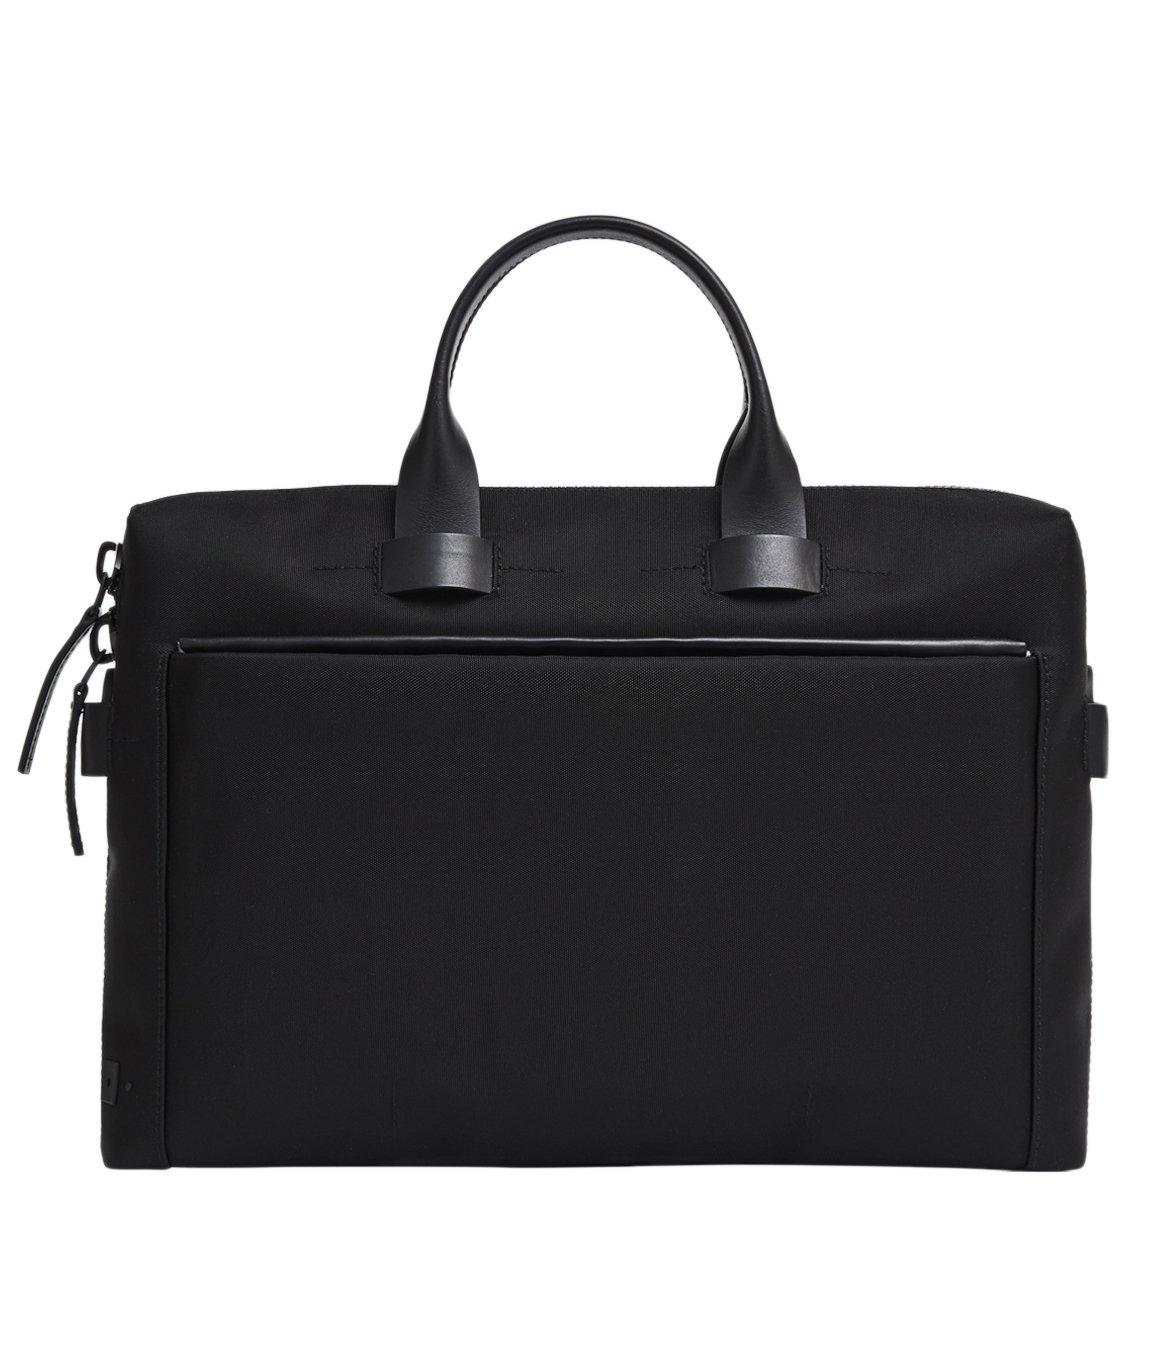 Nylon & Leather Slim Briefcase image 0